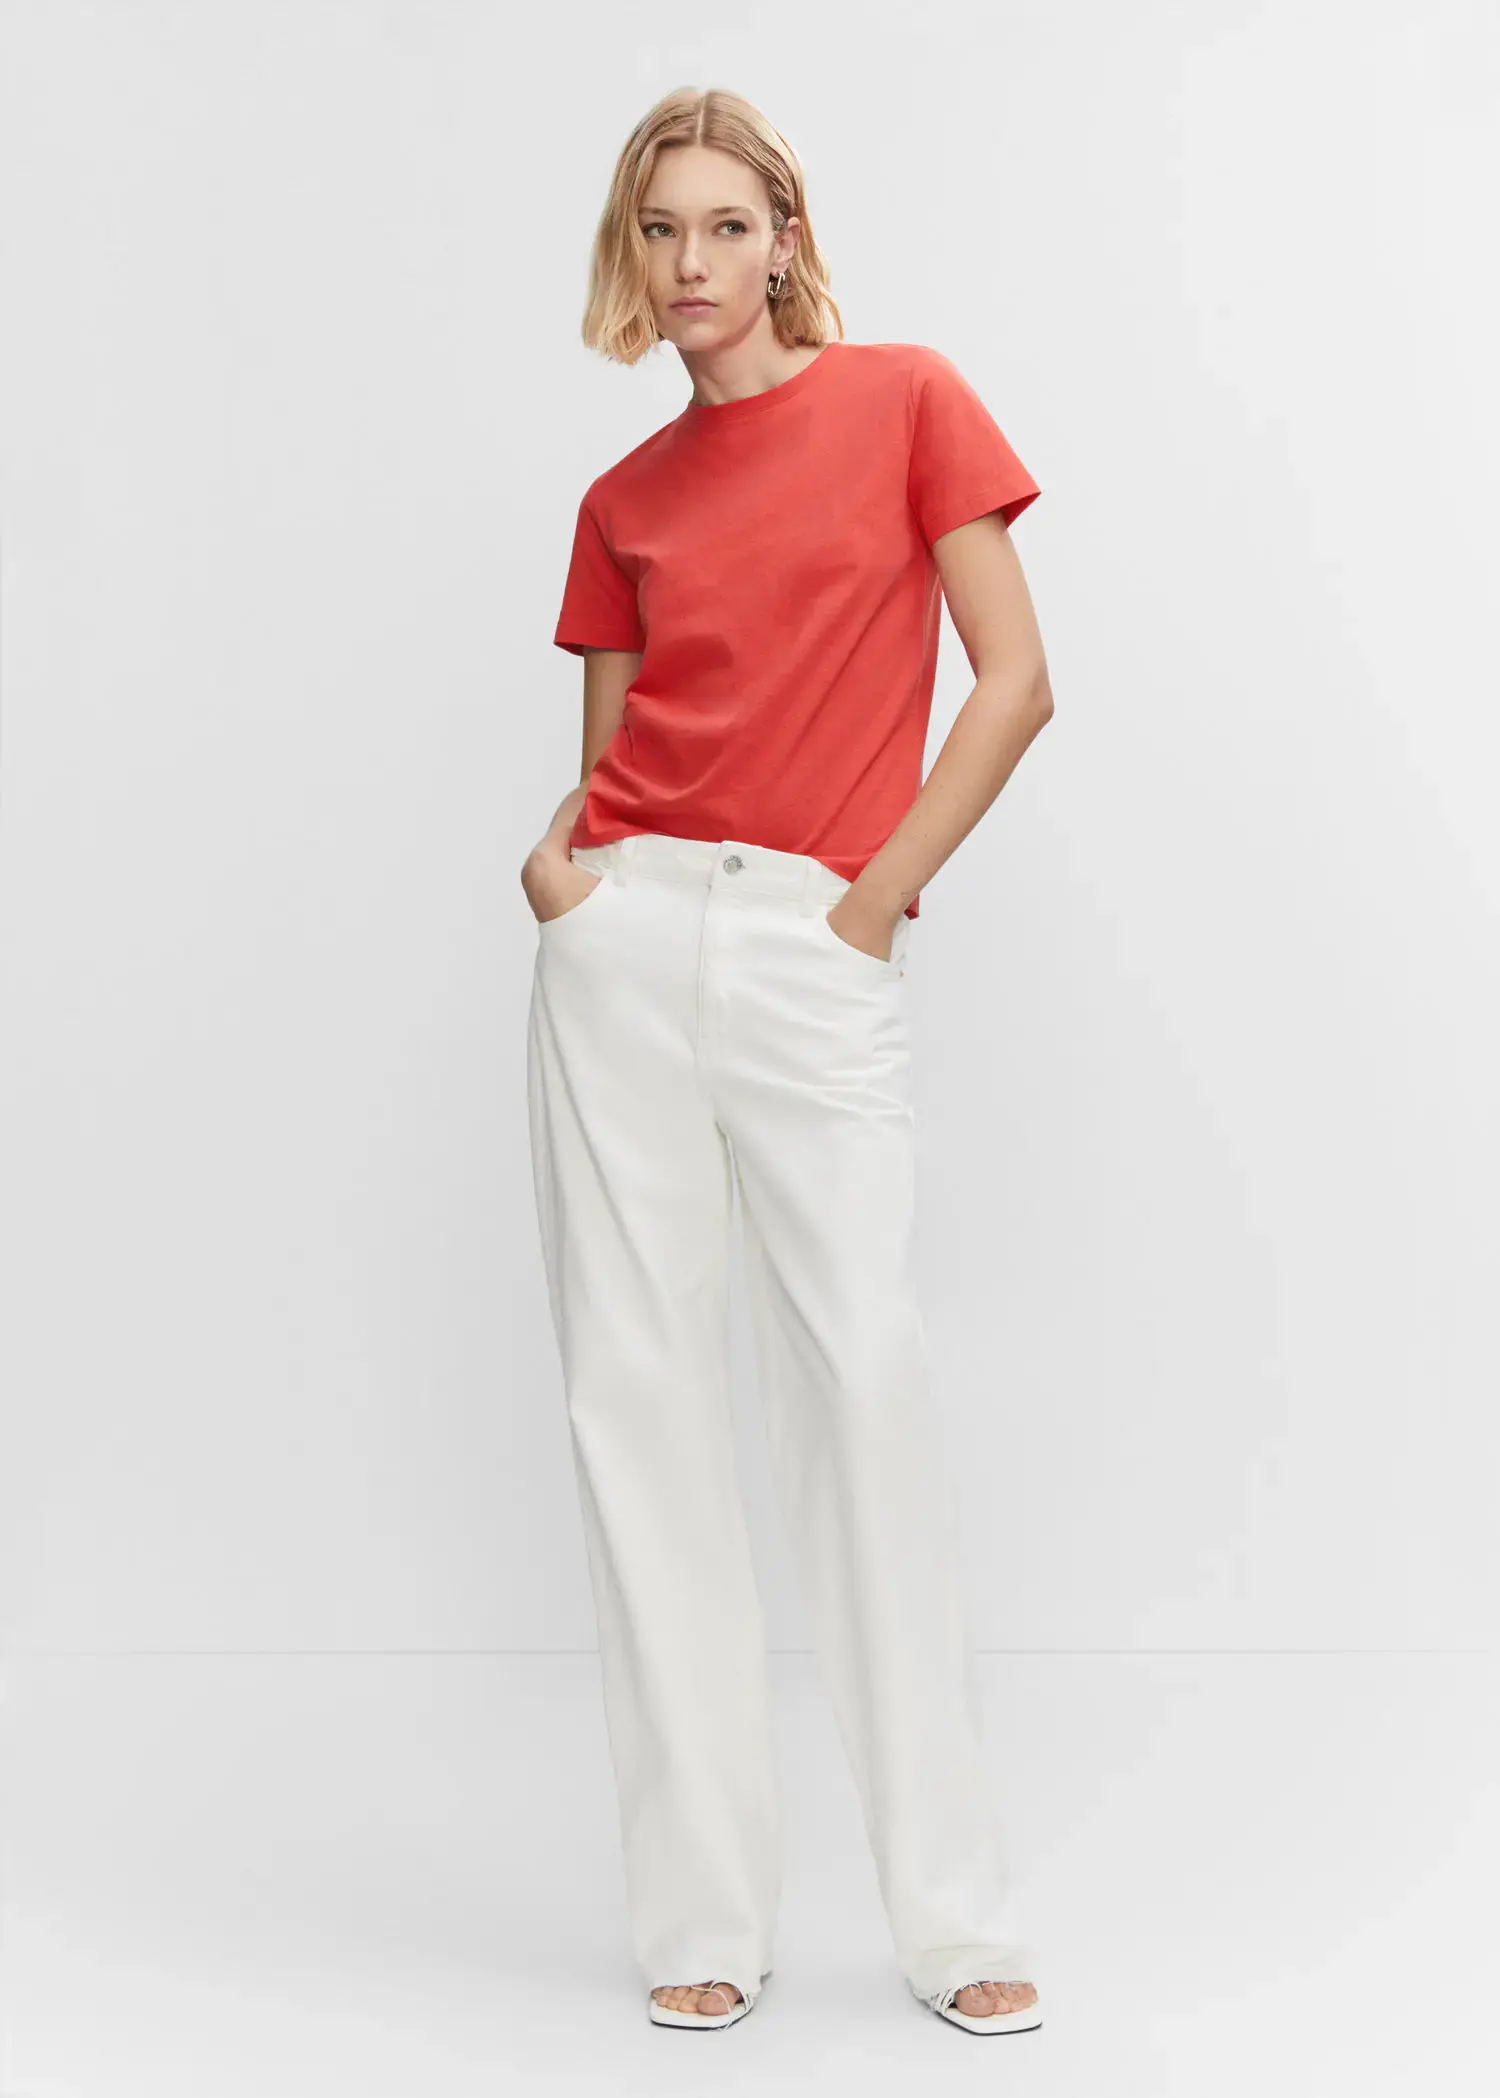 Mango 100% cotton T-shirt. a woman wearing a red shirt and white pants. 